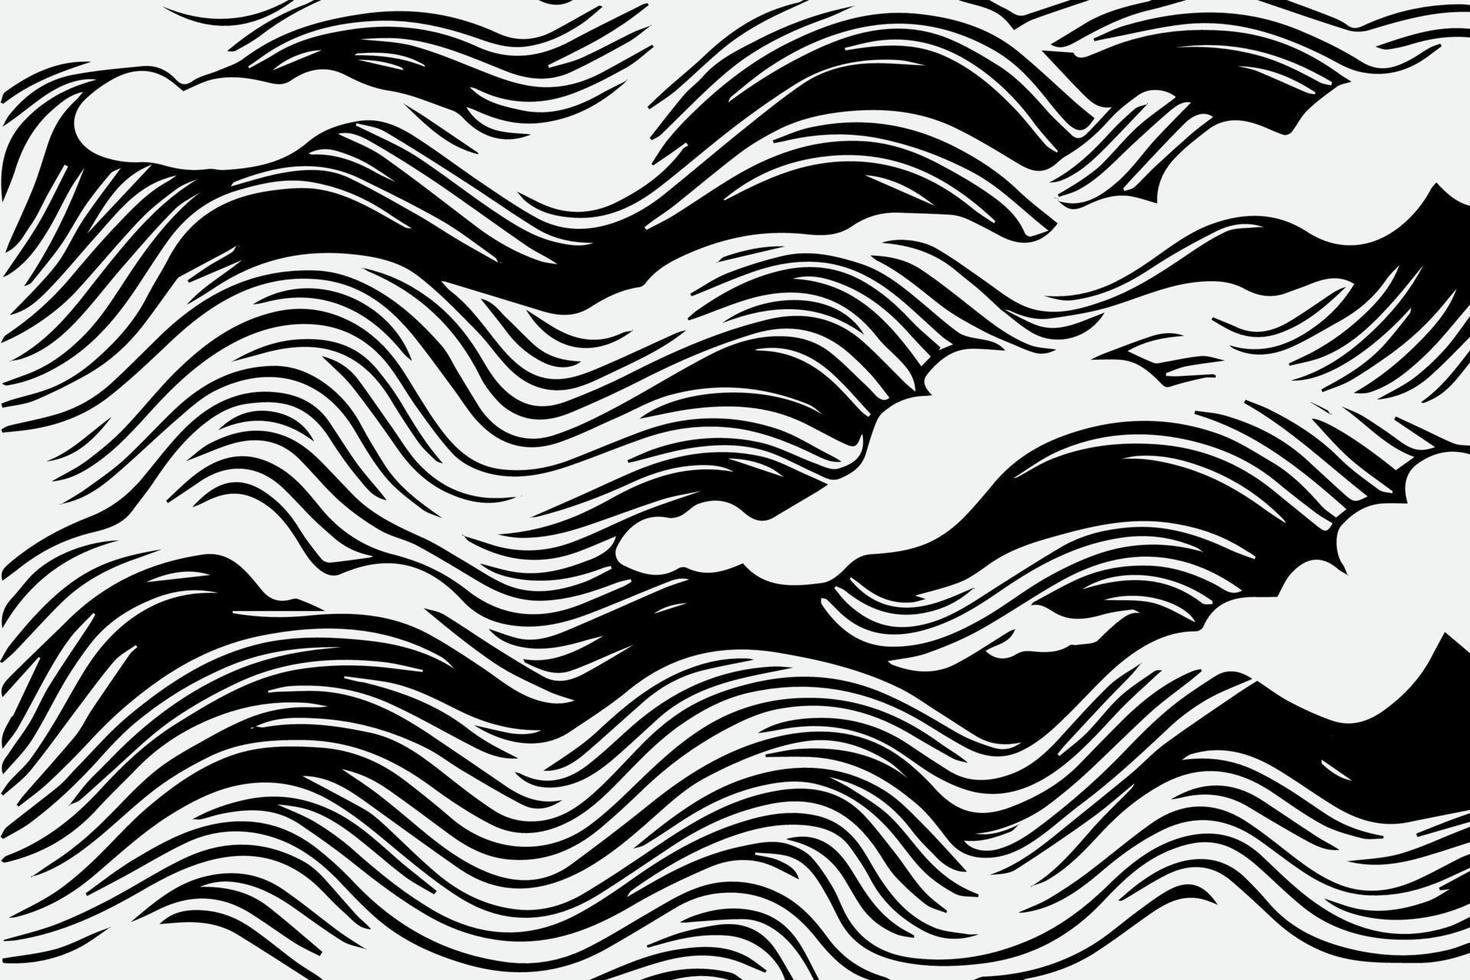 Illustration Line Forming a wave in Vector EPS Format